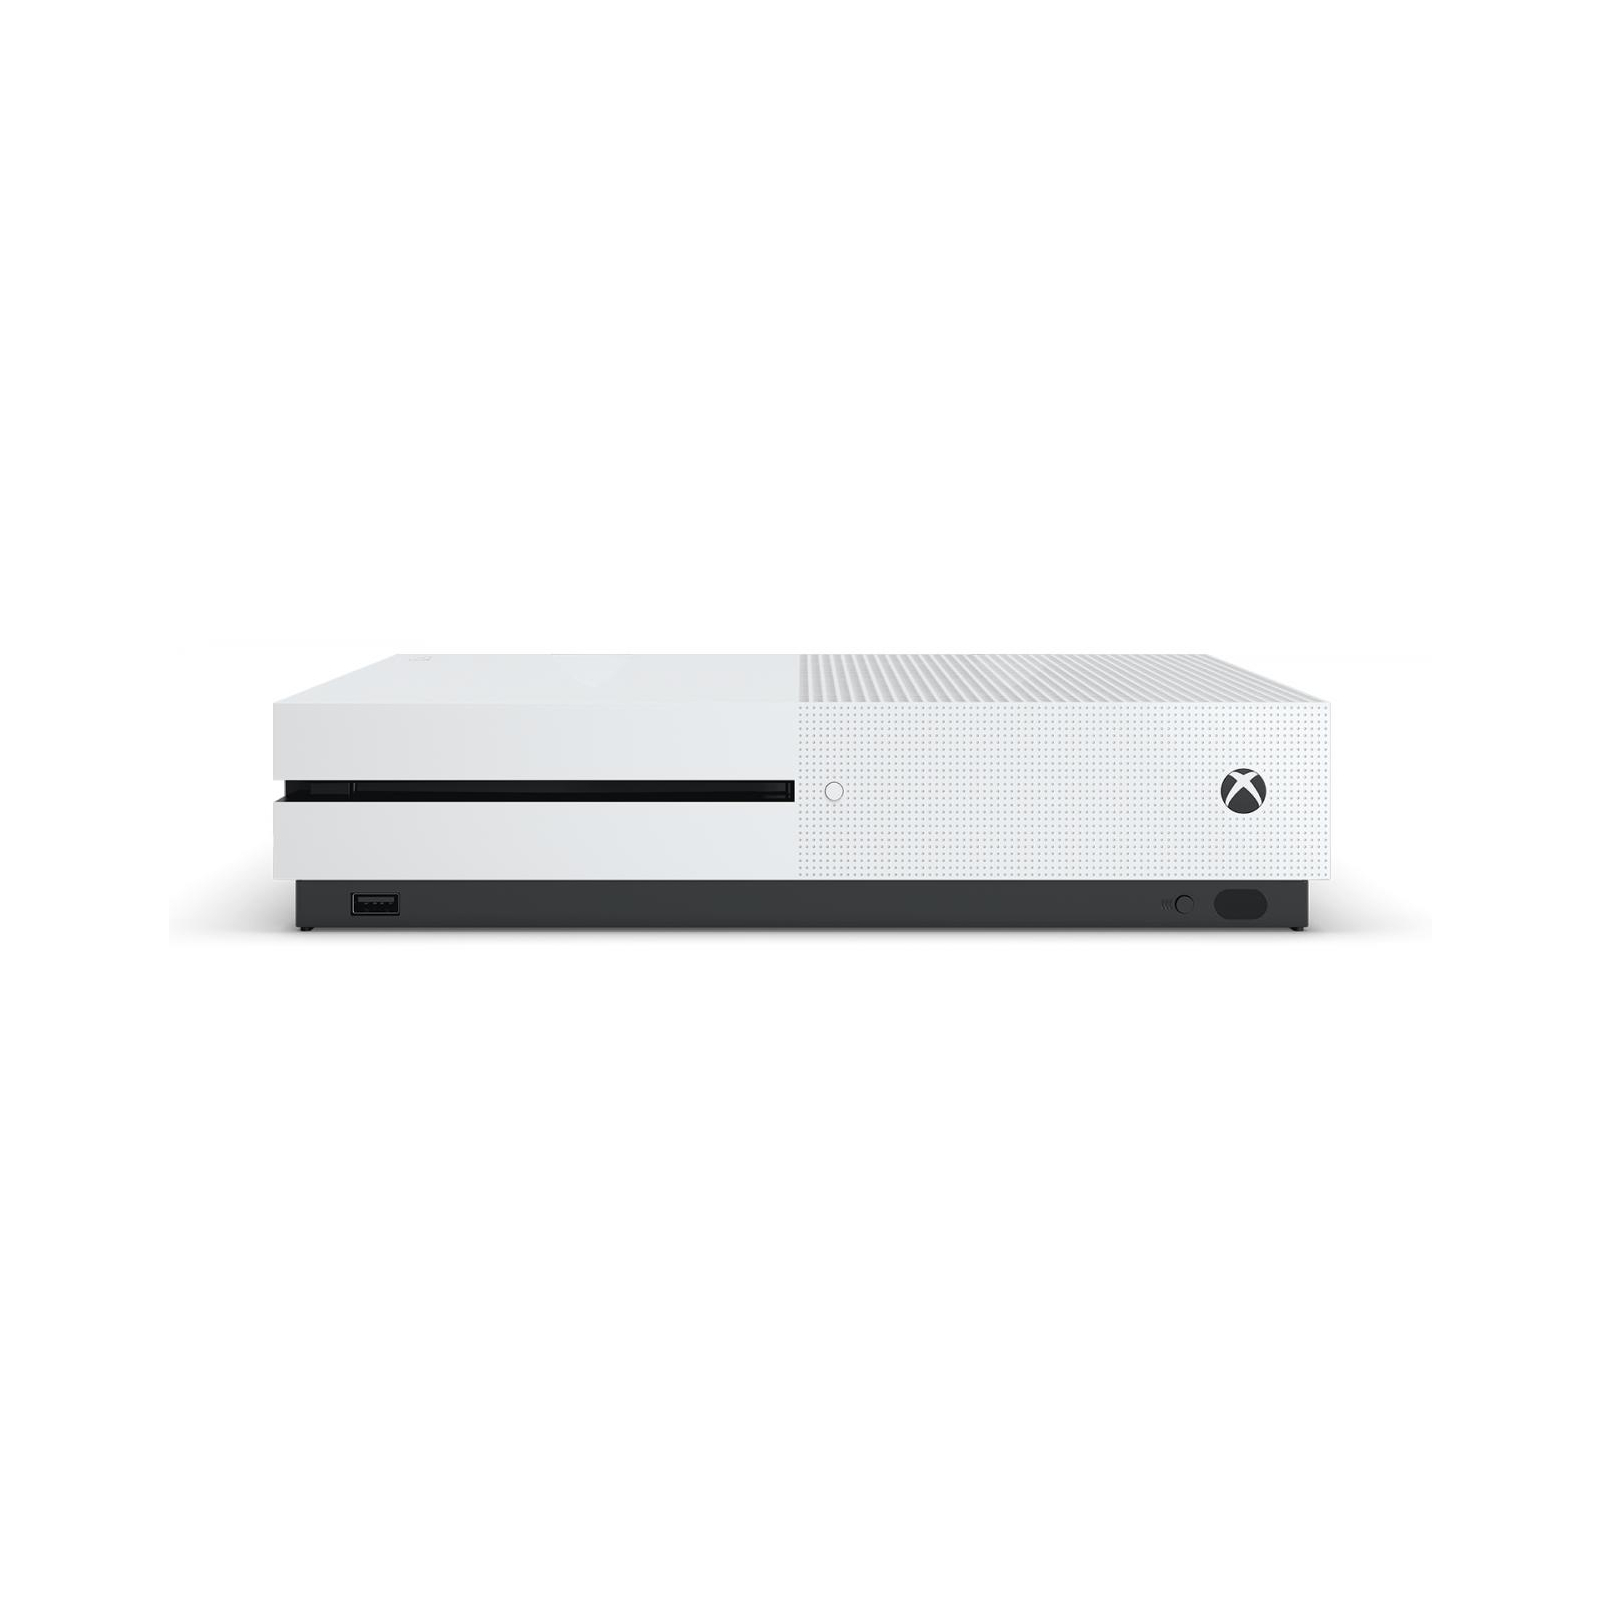 Игровая консоль Microsoft Xbox One S 1TB White изображение 3